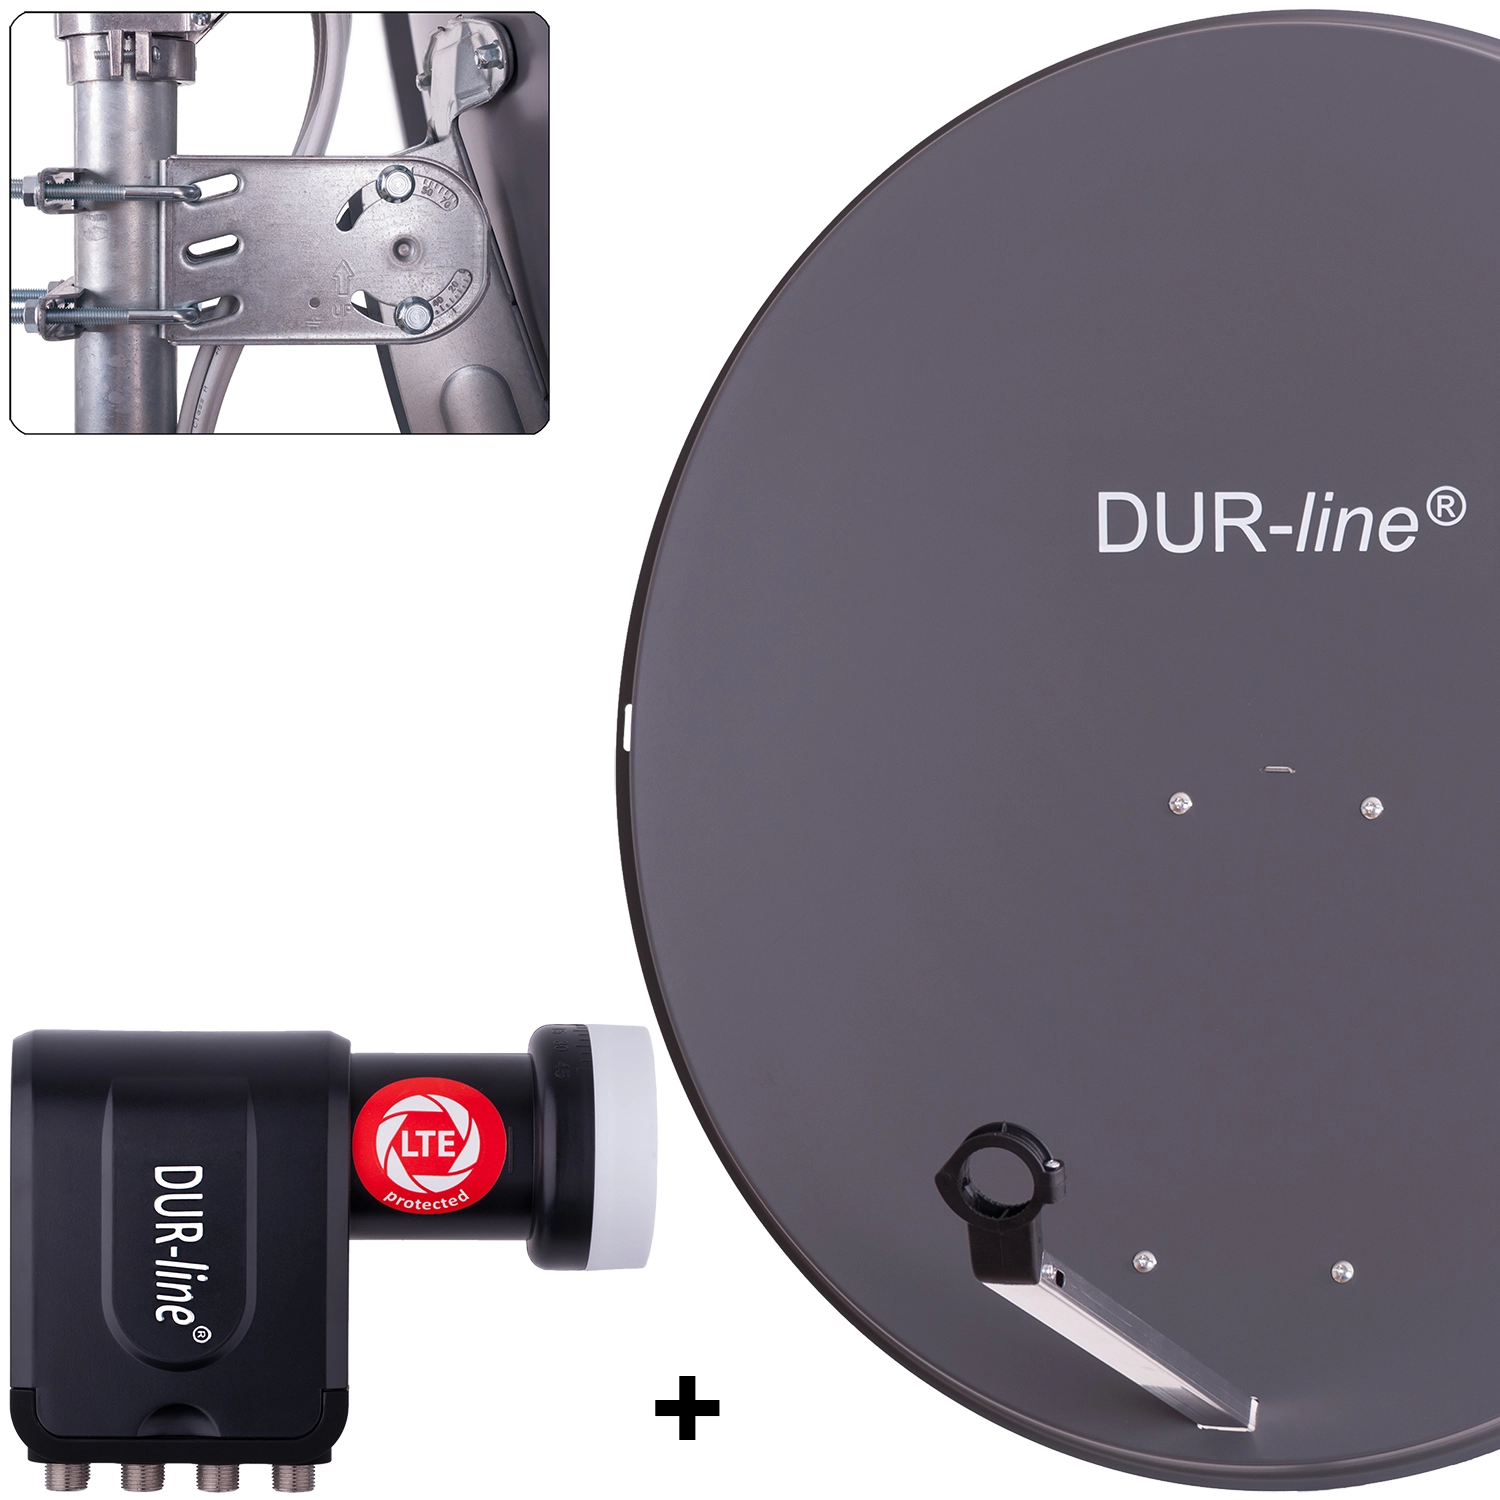 DUR-line MDA 90 A + +Ultra Octo LNB - 8 TN LNB Set